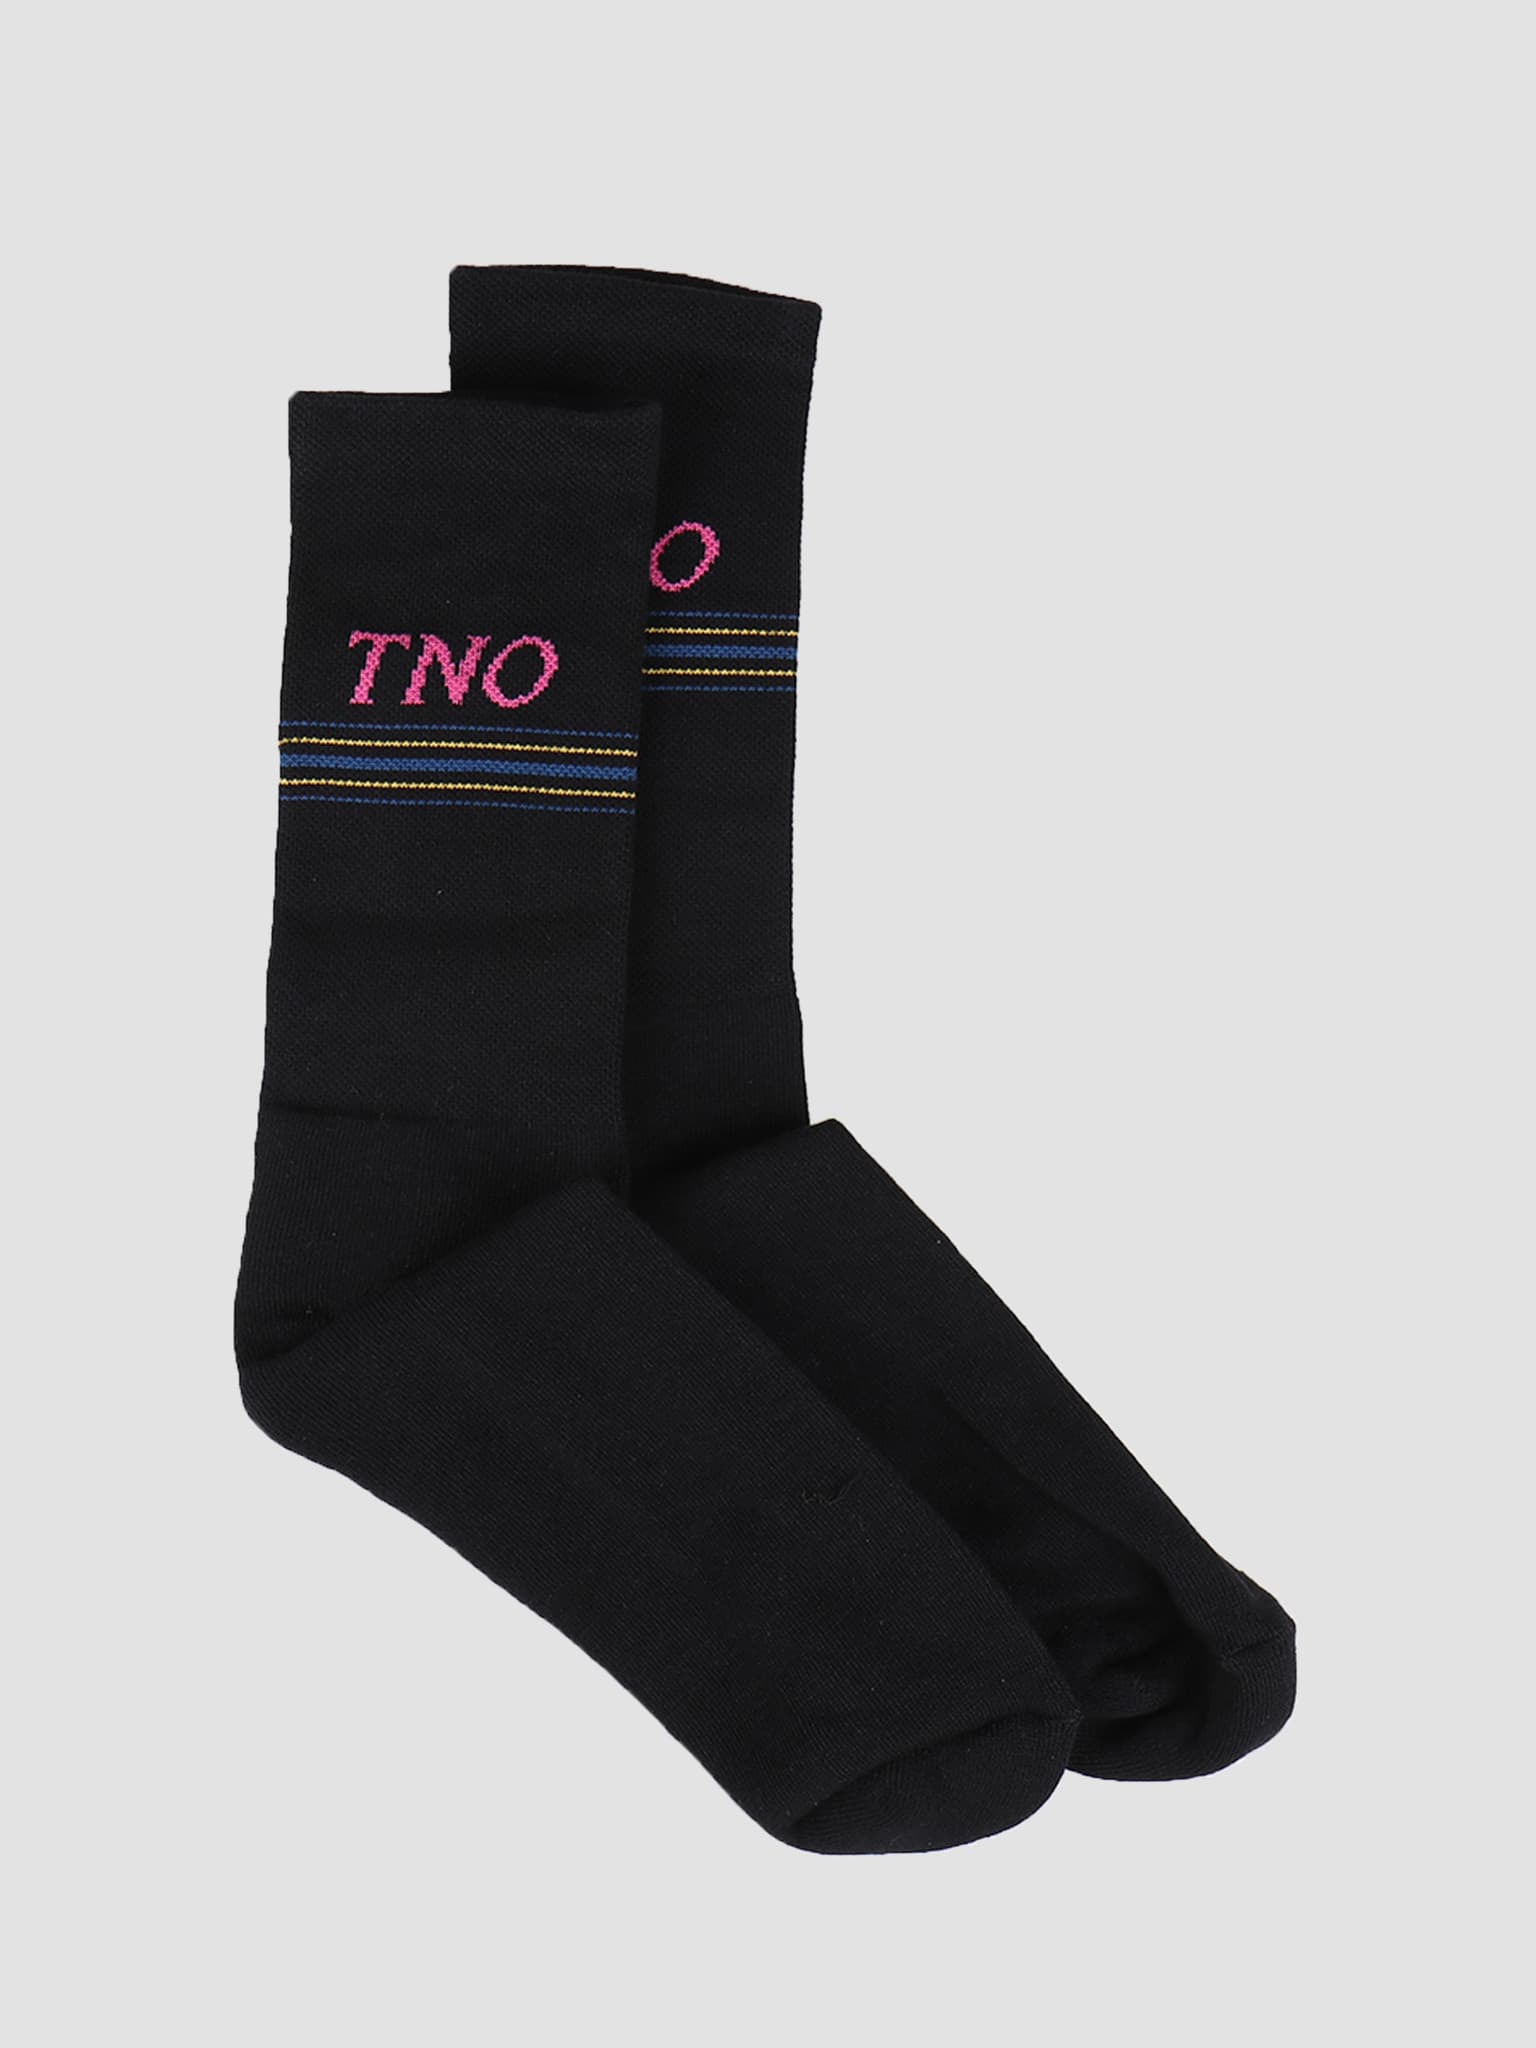 TNO Underline Socks Black Pink TNO.212.UND.600.999